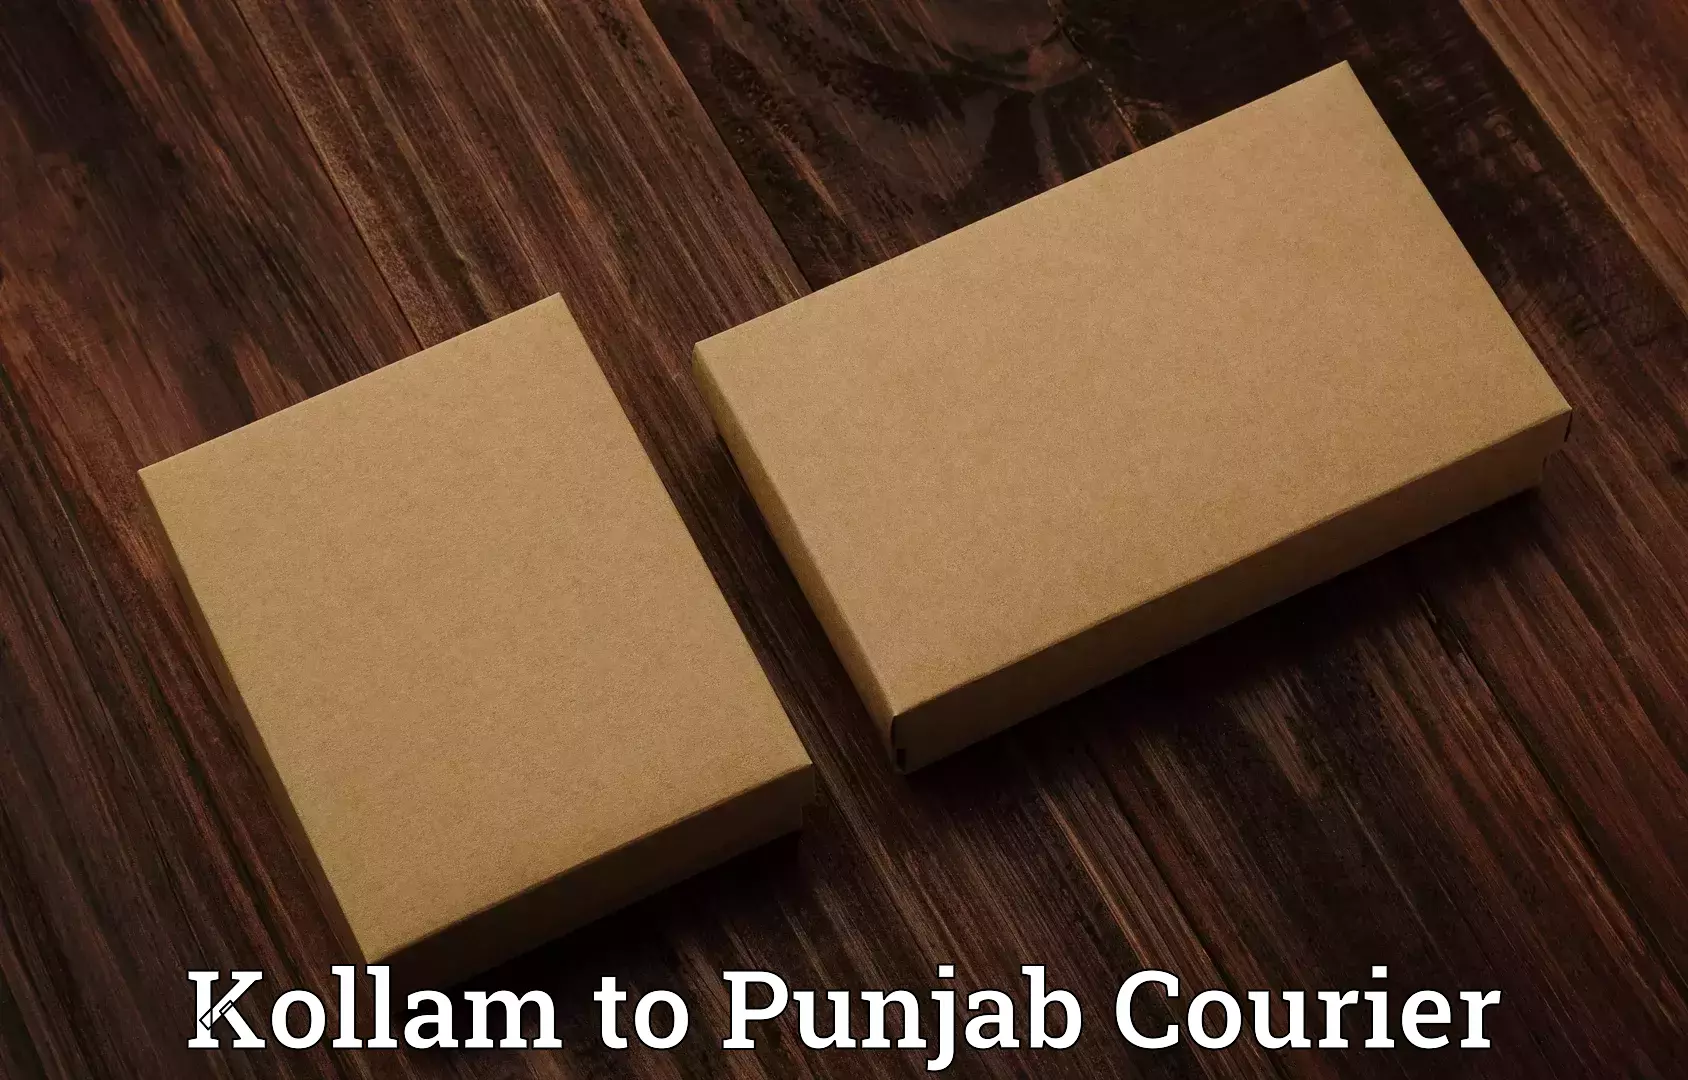 Luggage transport consultancy Kollam to Punjab